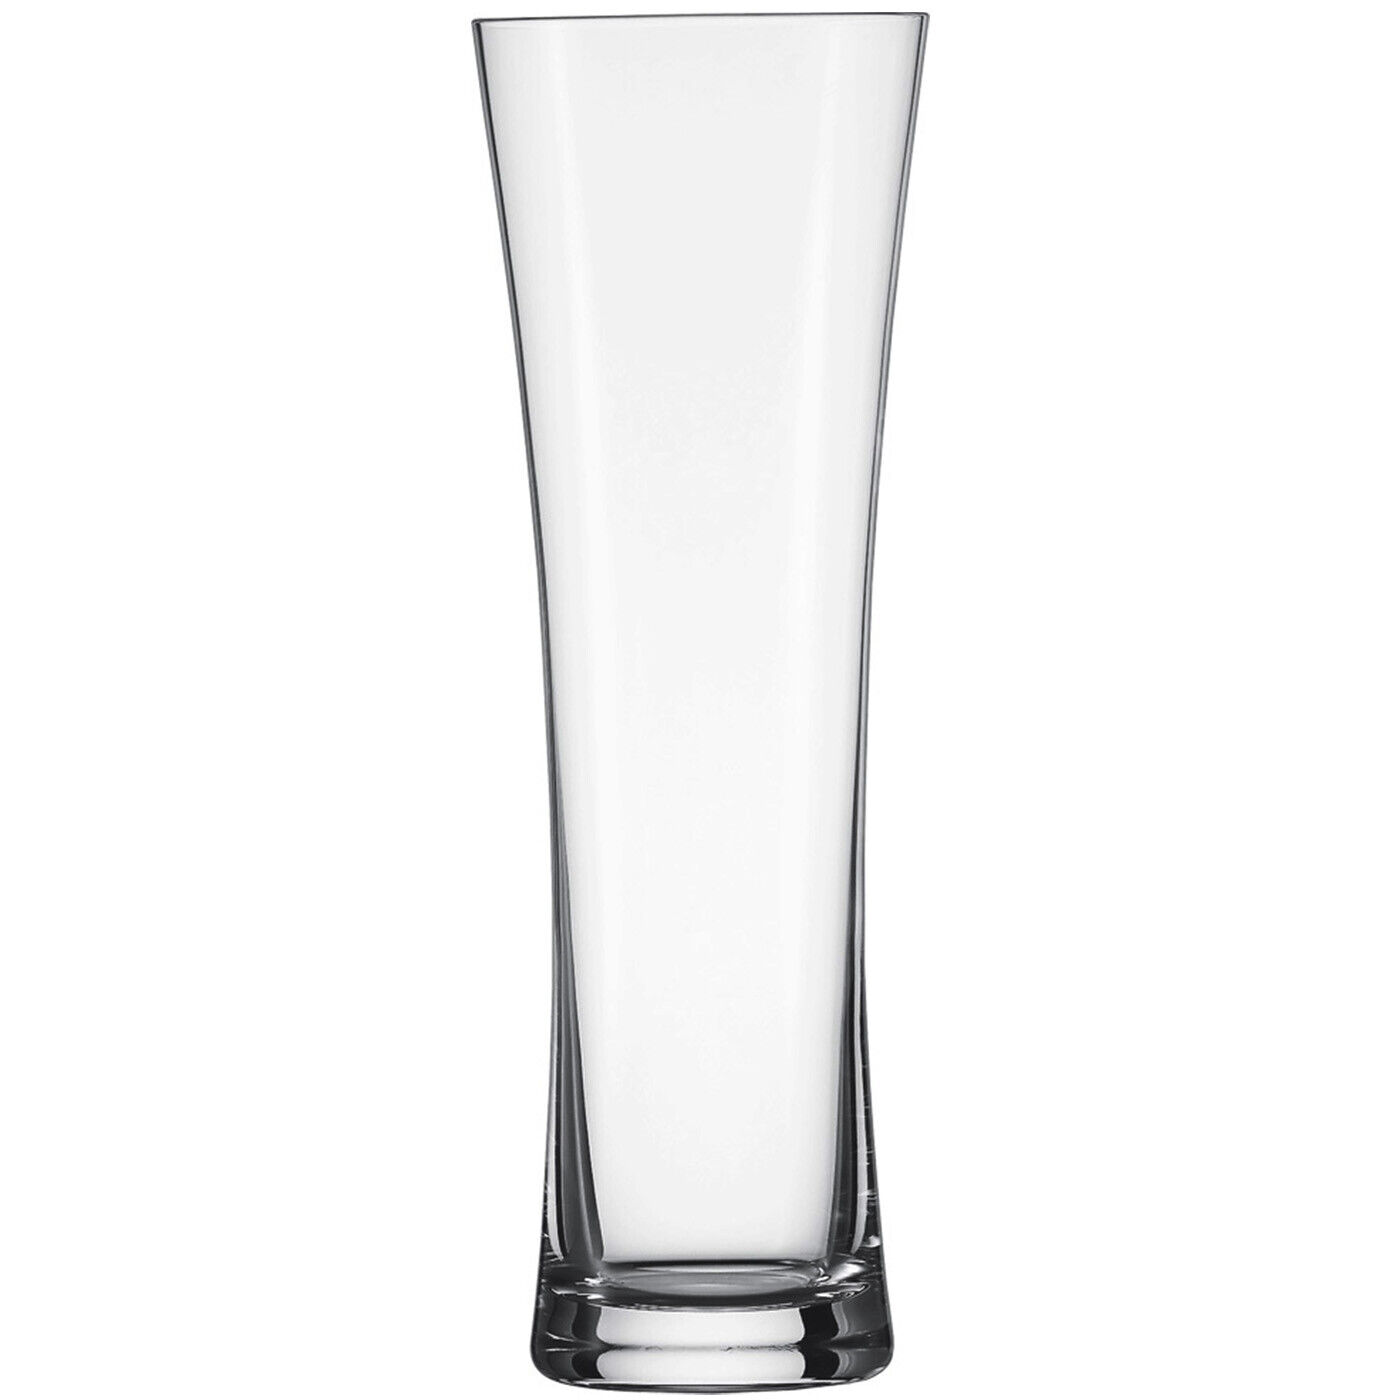 Schott Zwiesel Tritan Crystal 14.2 All items free shipping Oz 6 Beer Of Glass 100% quality warranty Wheat Set